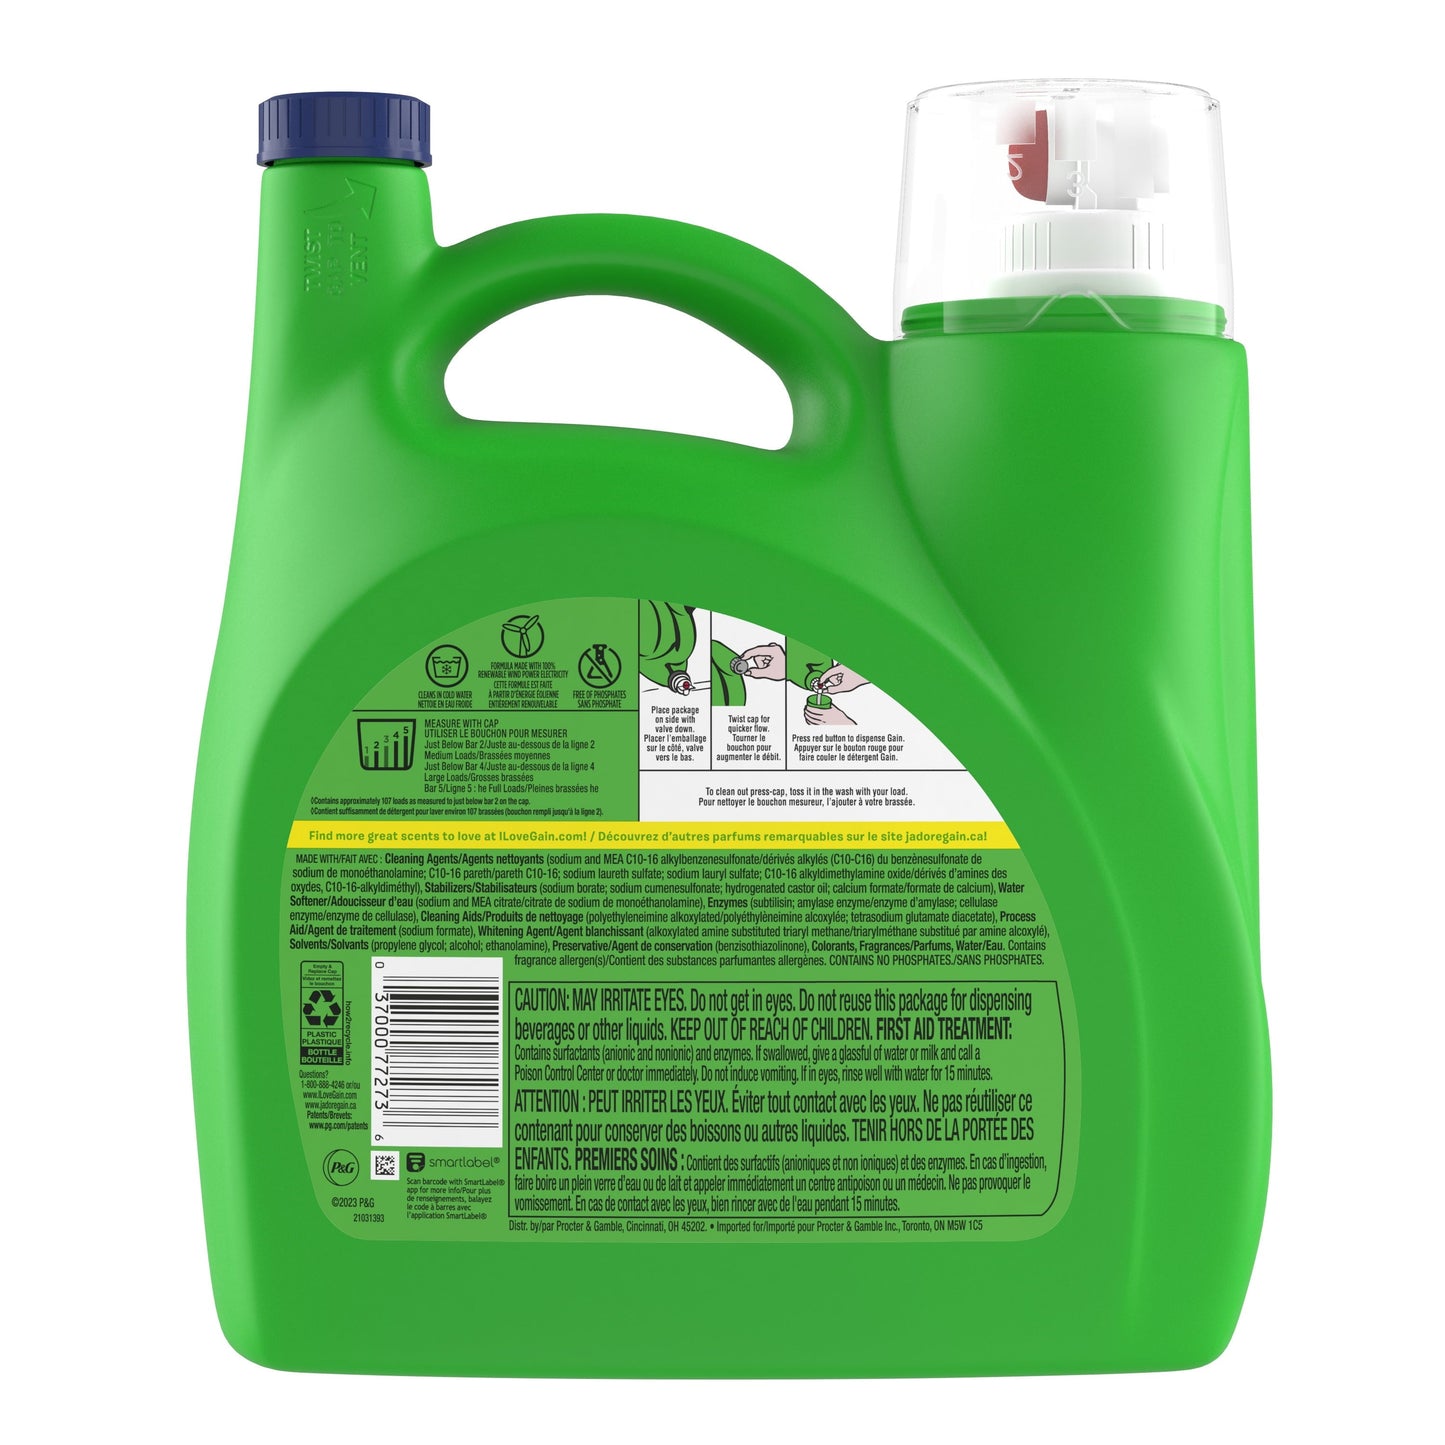 Gain + Aroma Boost Liquid Laundry Detergent, Original Scent, 107 Loads, 154 fl oz